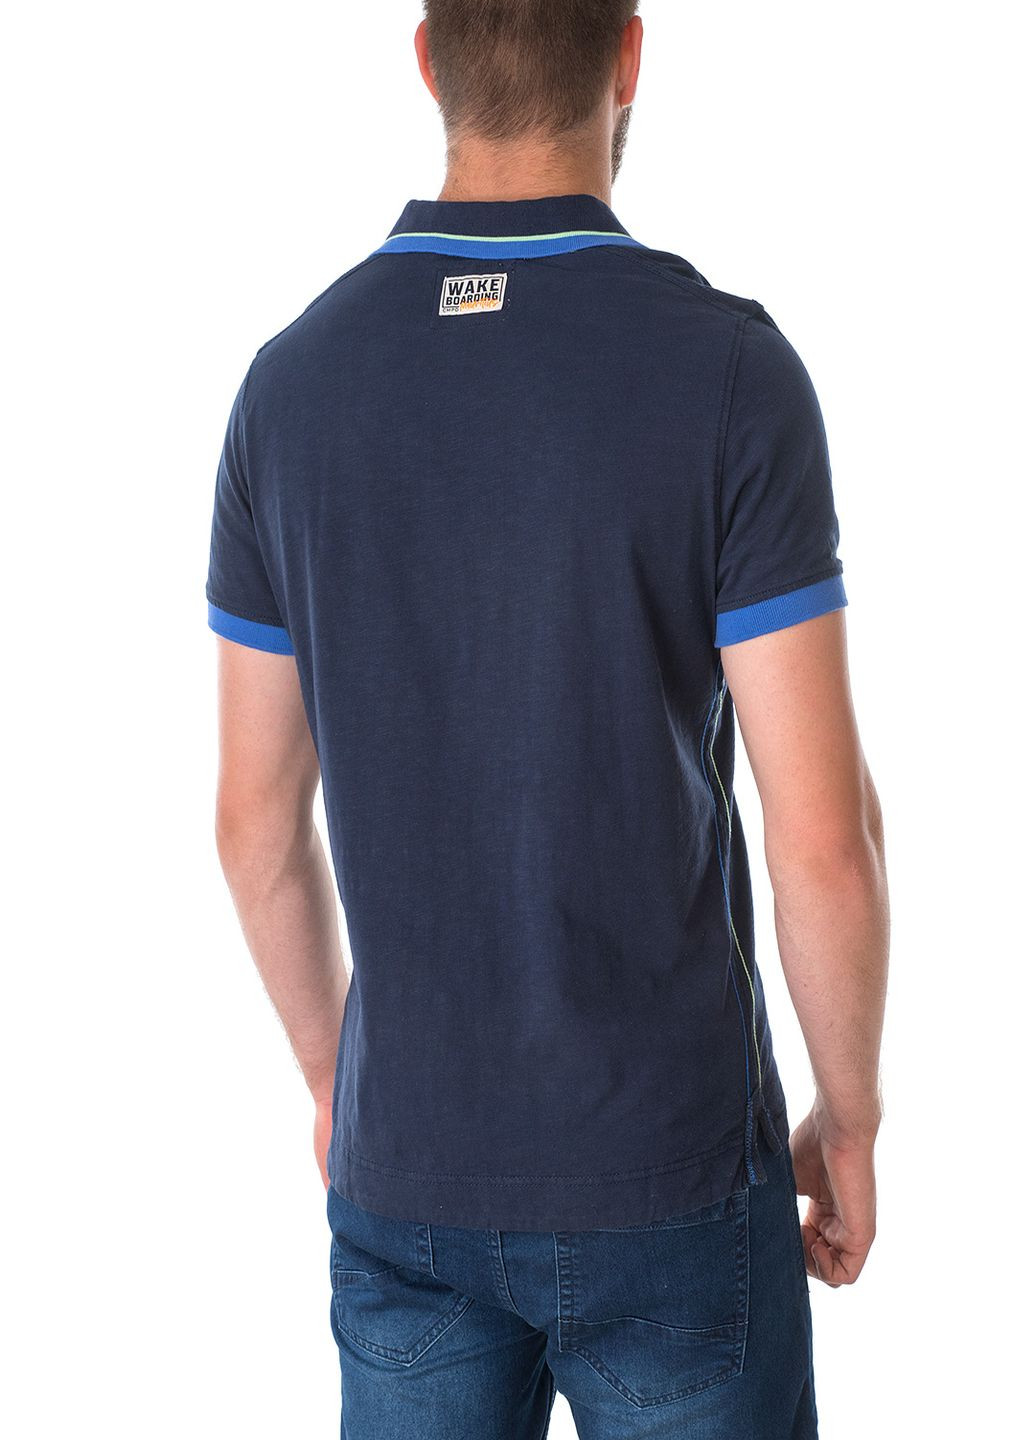 Синяя футболка-поло для мужчин Camp David однотонная